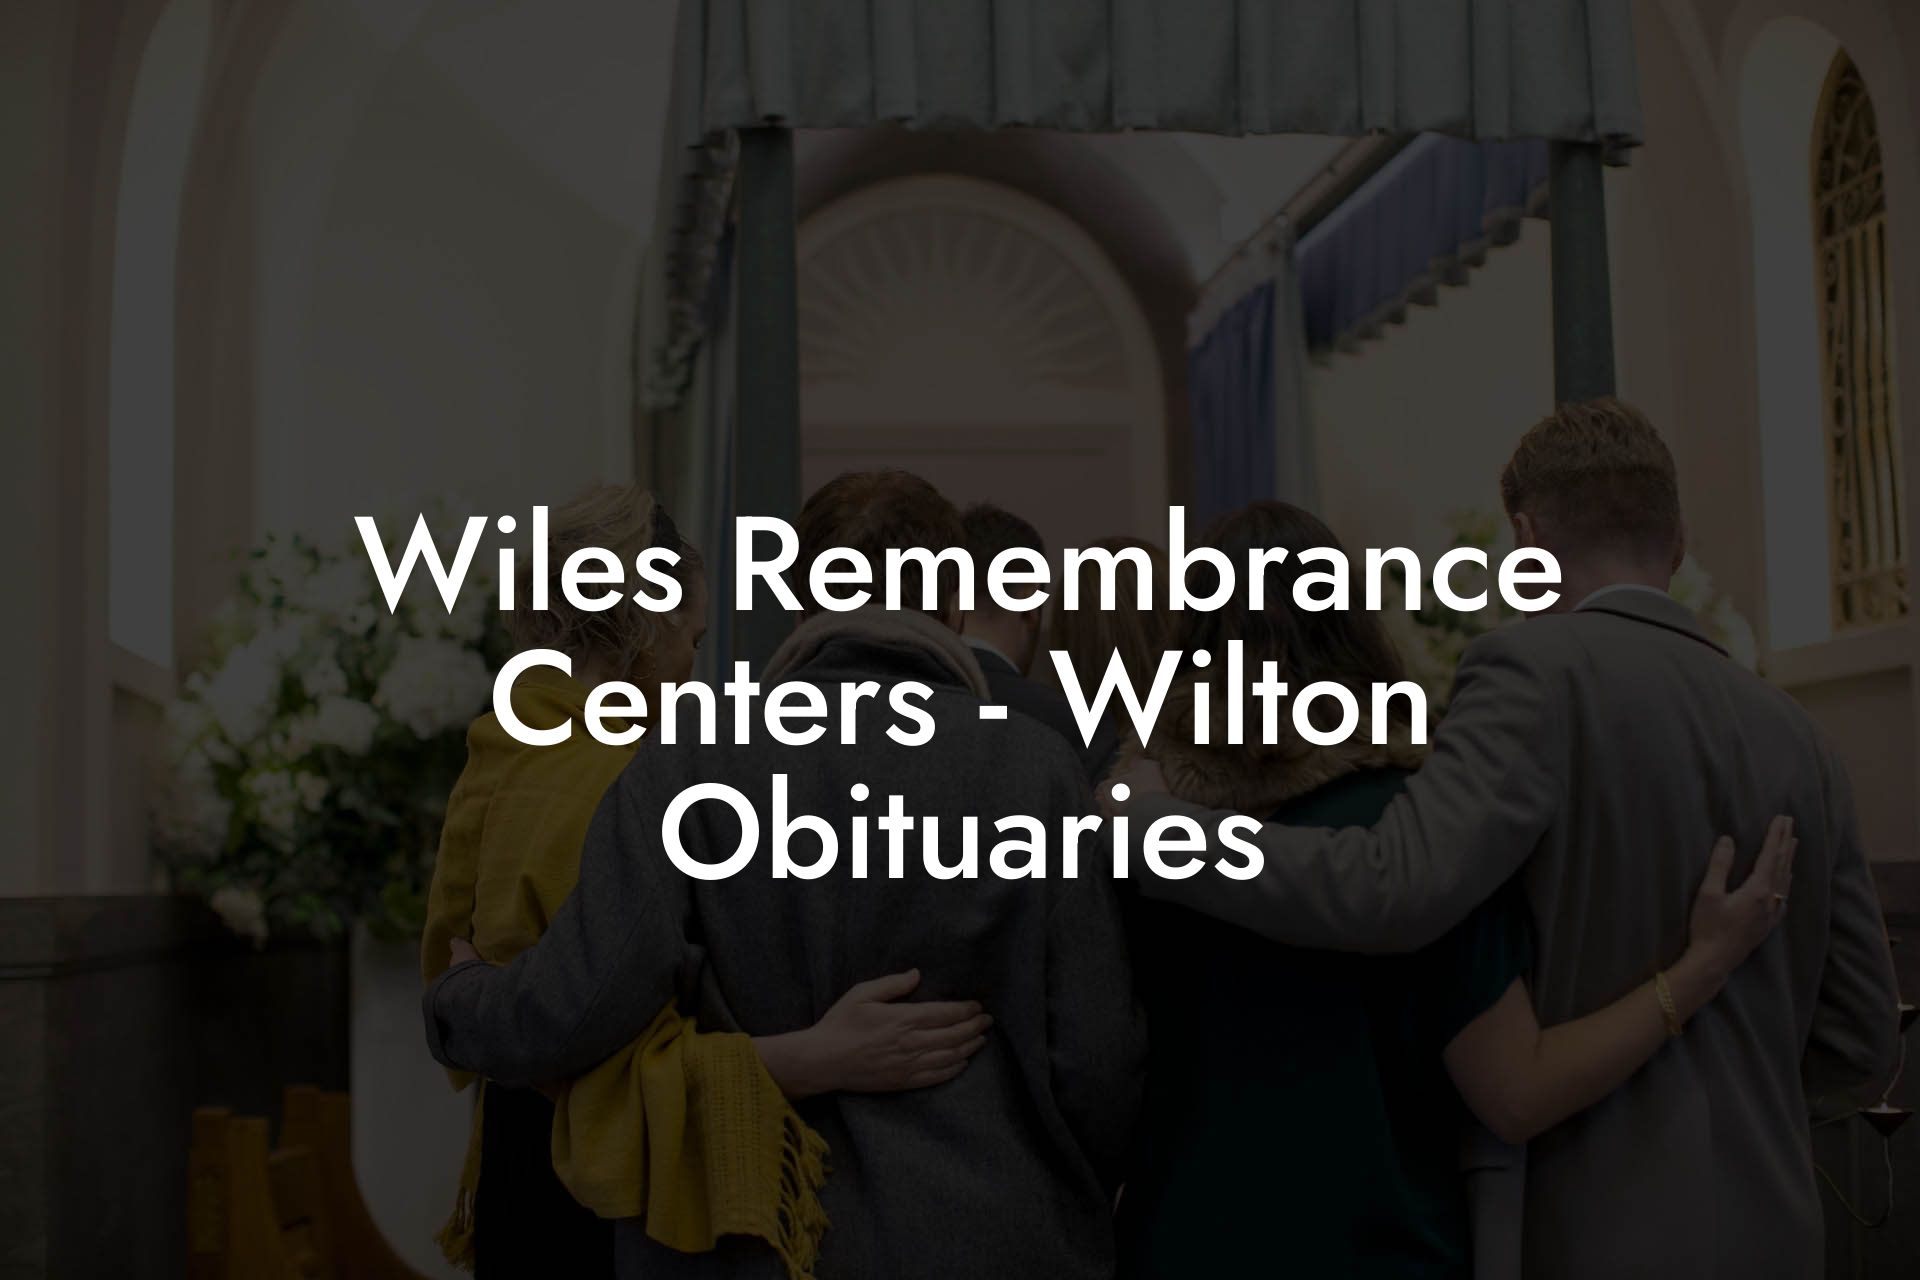 Wiles Remembrance Centers - Wilton Obituaries